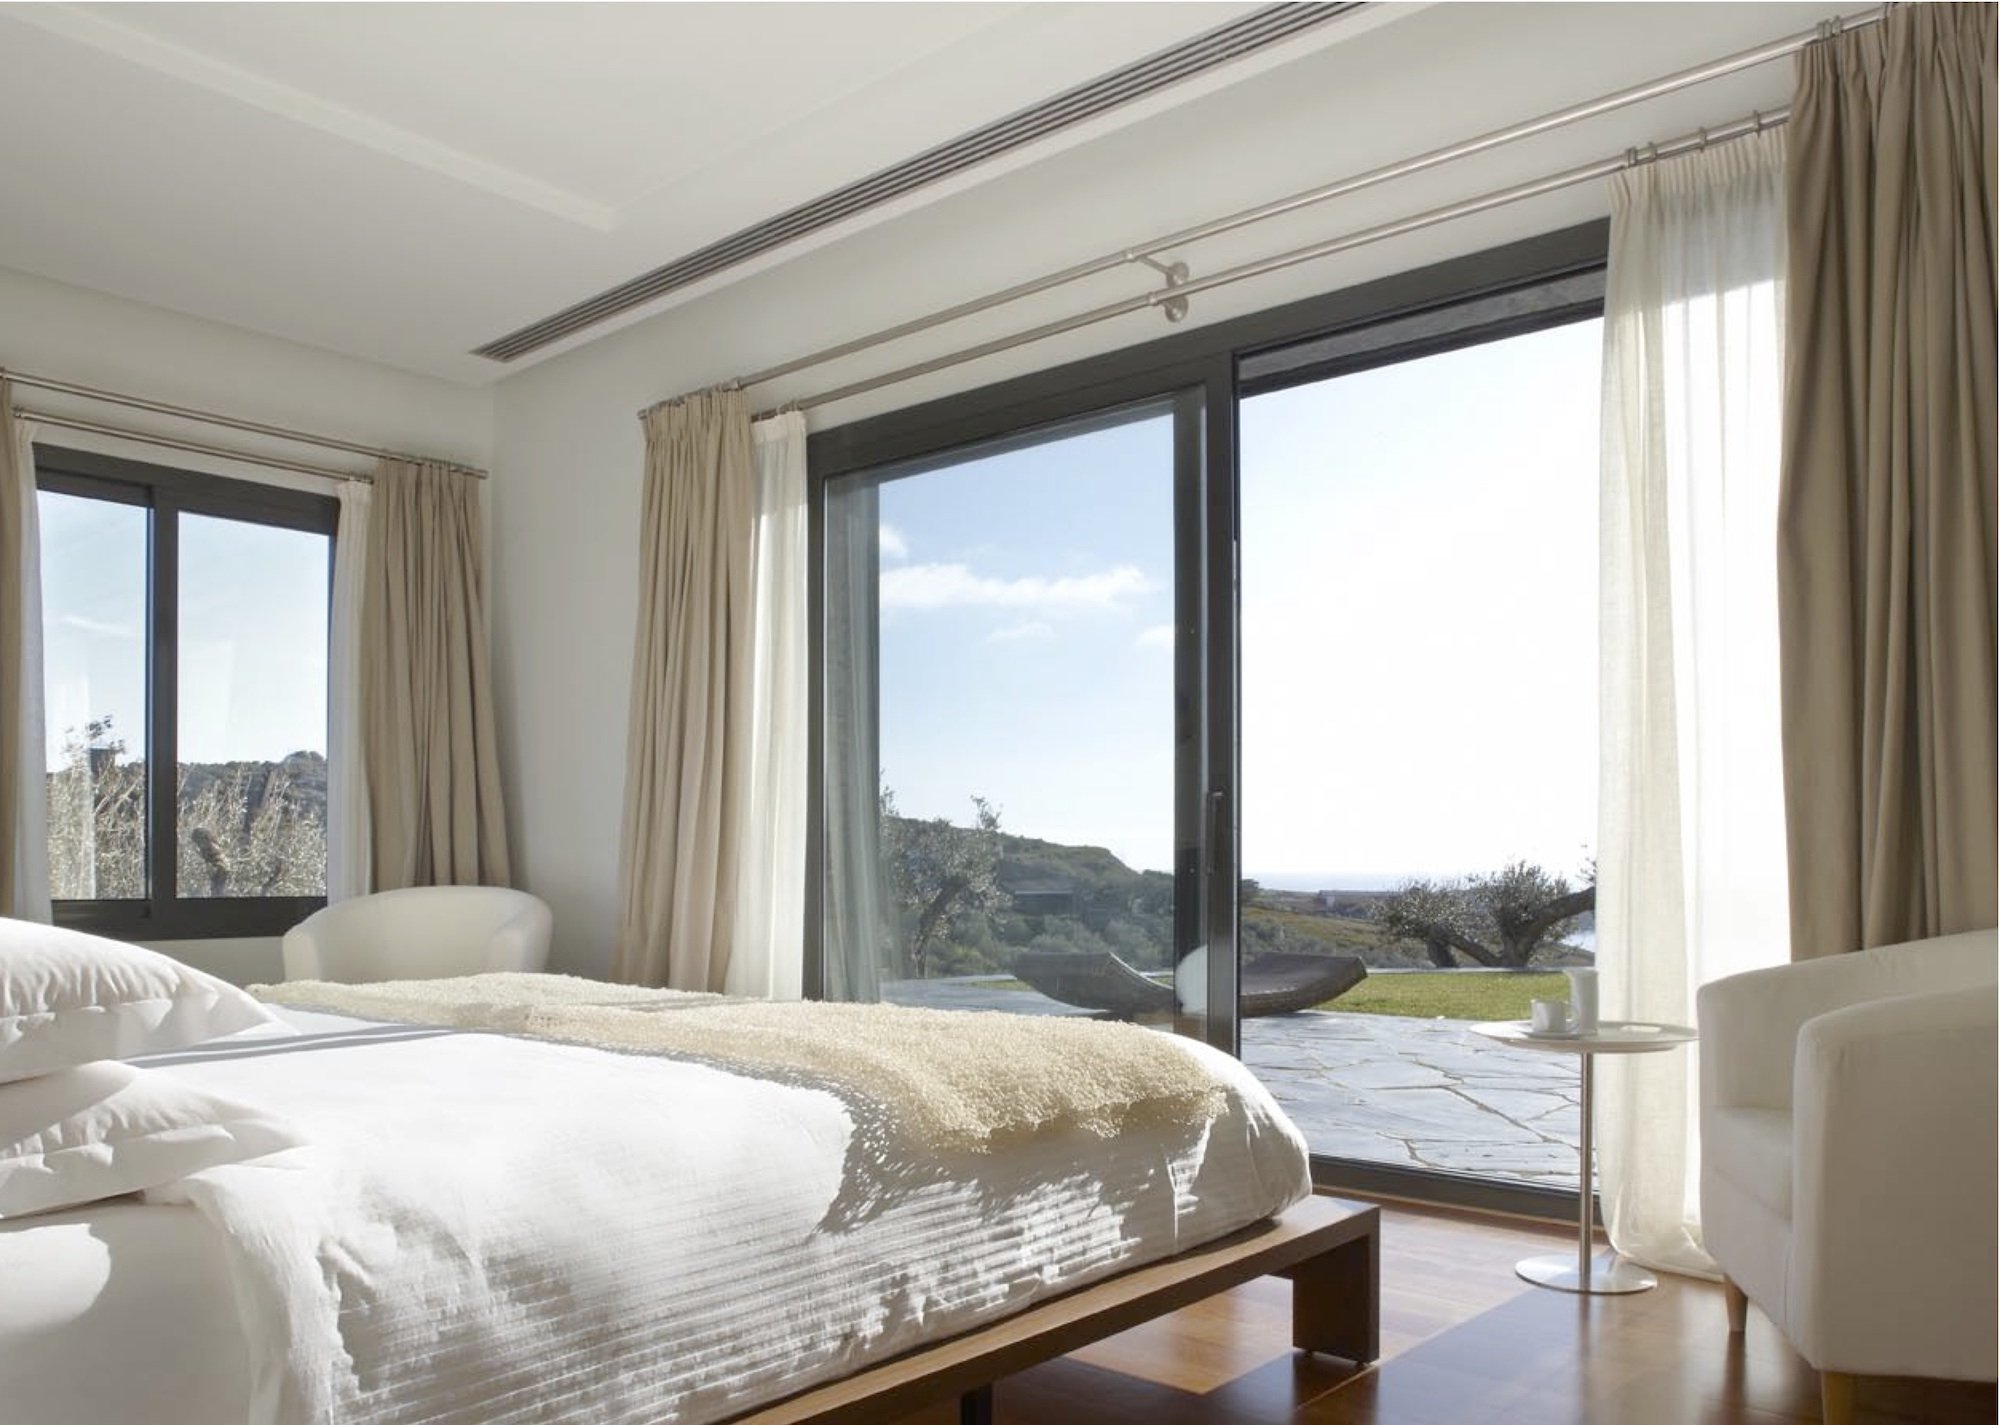 Luxury estate in Cadaqués, Spain, with swimming pool overlooking the Mediterranean Sea